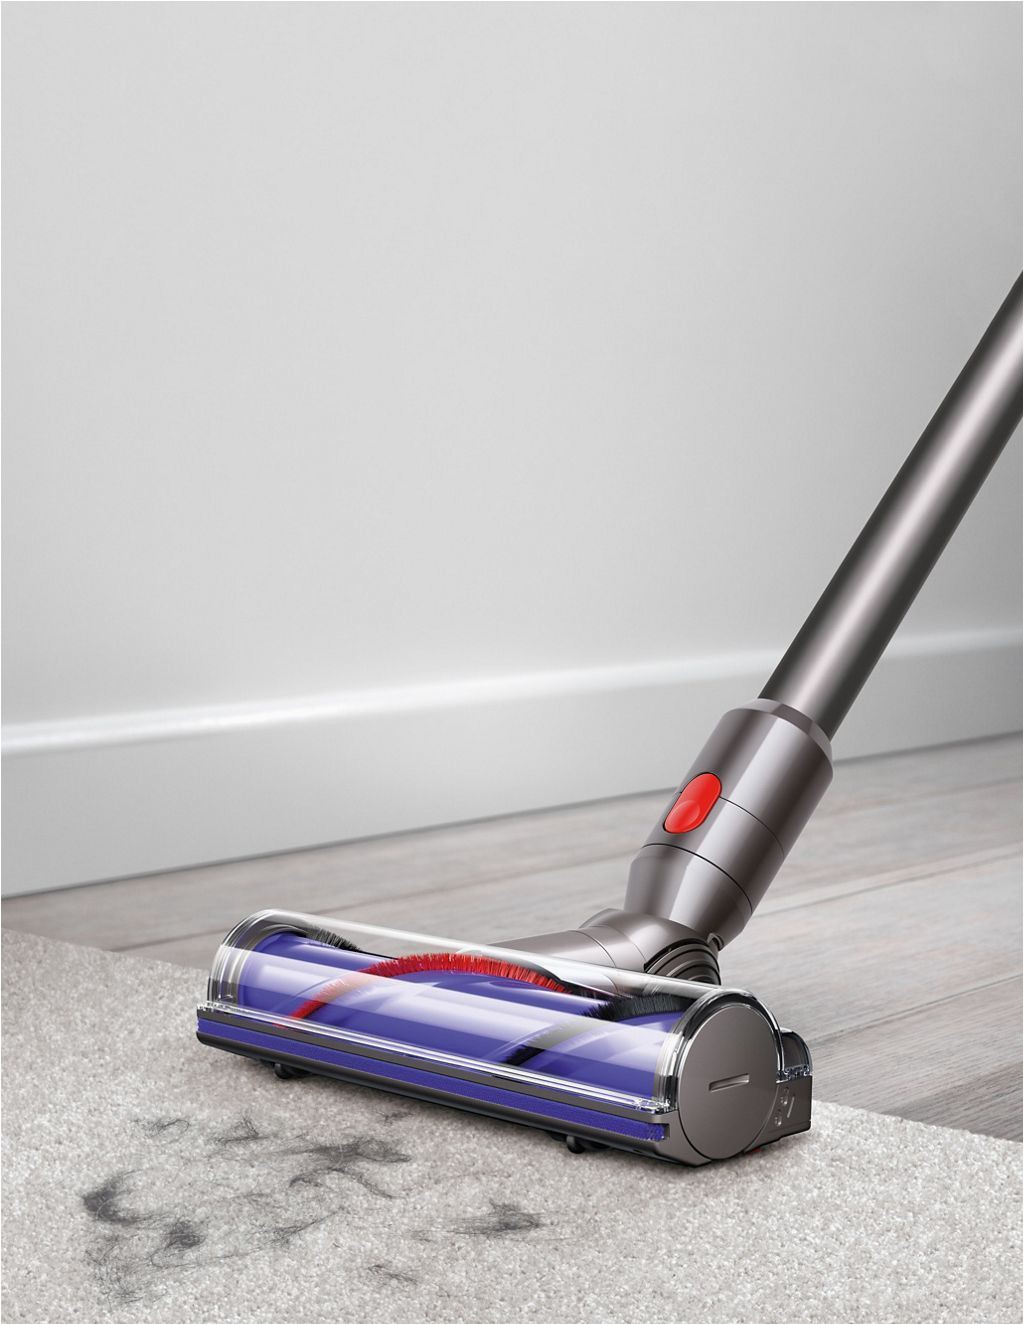 Rug Cleaner Bed Bath and Beyond Vacuum Cleaner Head On Carpet